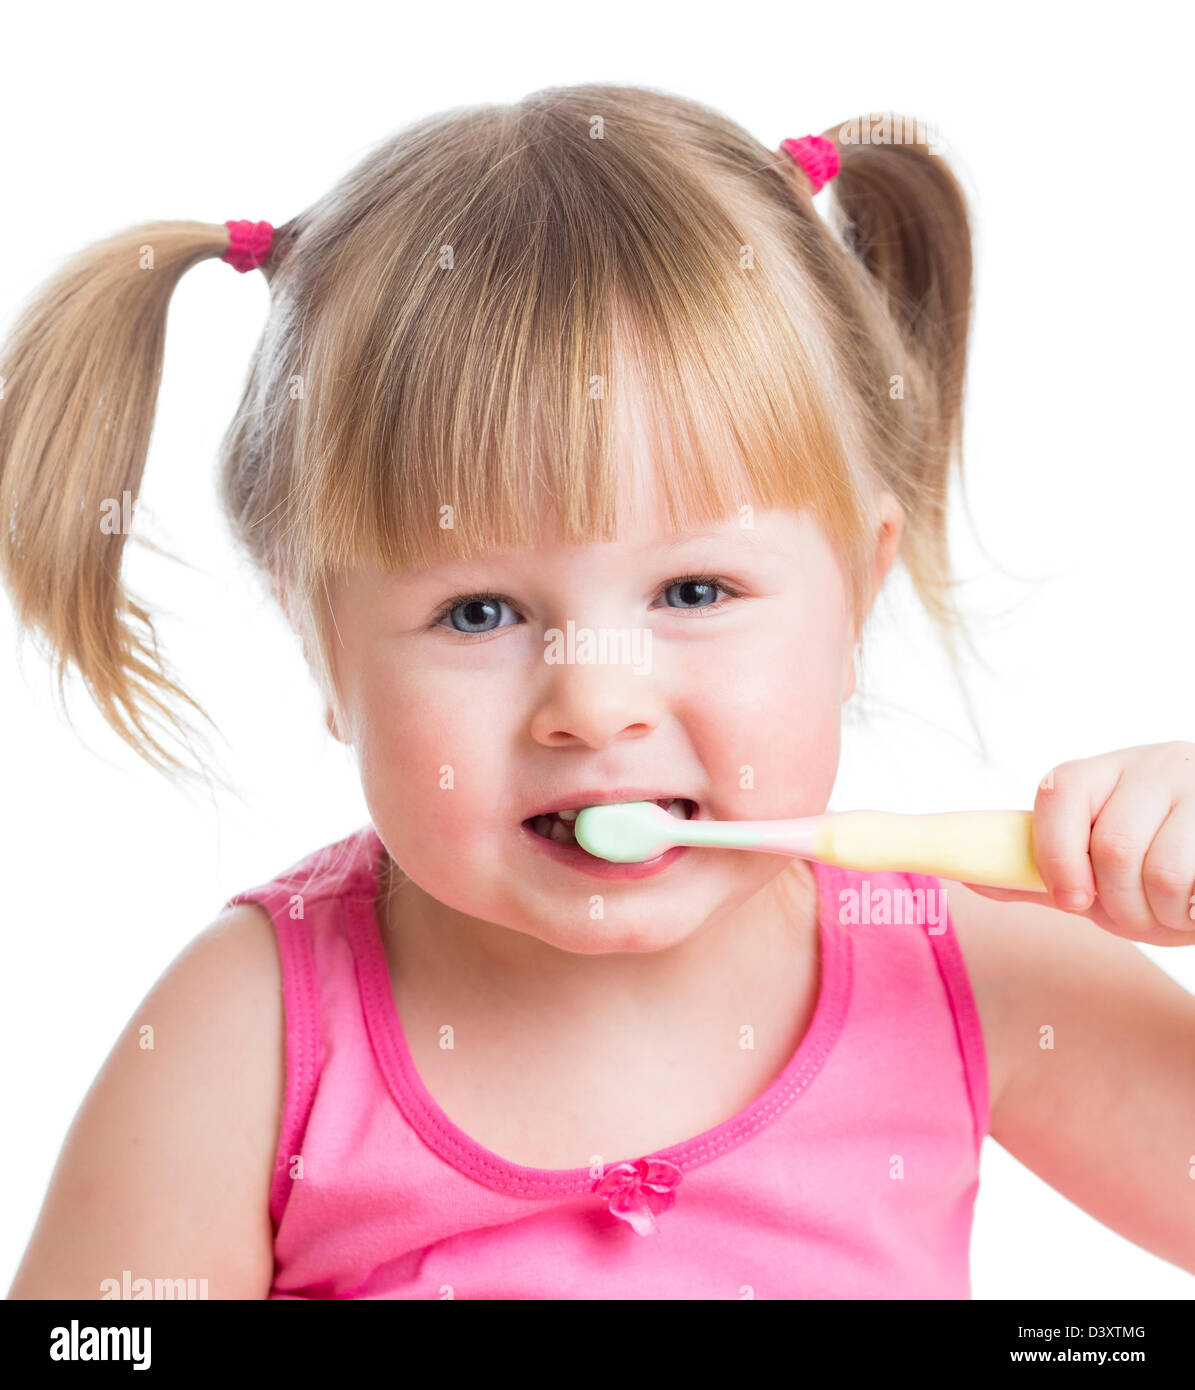 cute kid girl brushing teeth isolated on white background Stock Photo